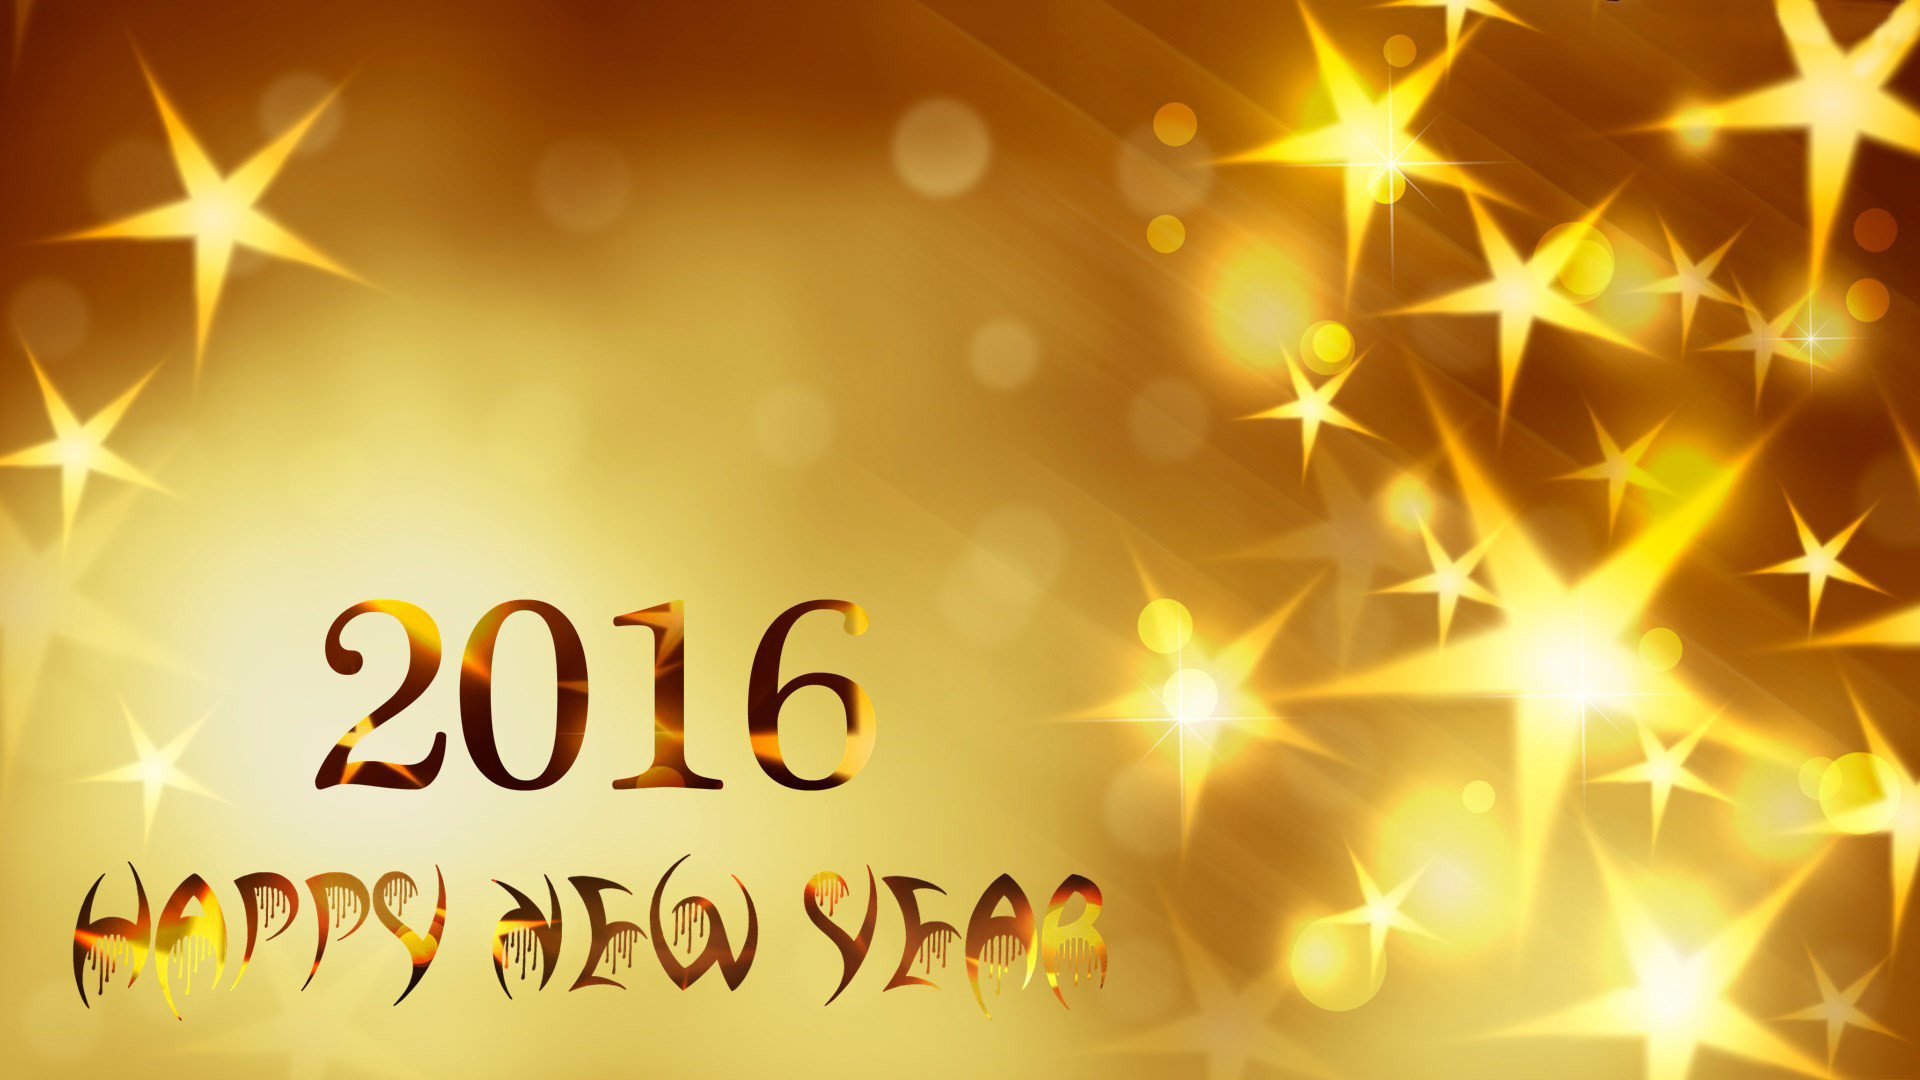 Best New Year 2016 wallpaper ID:256751 for High Resolution full hd 1080p desktop